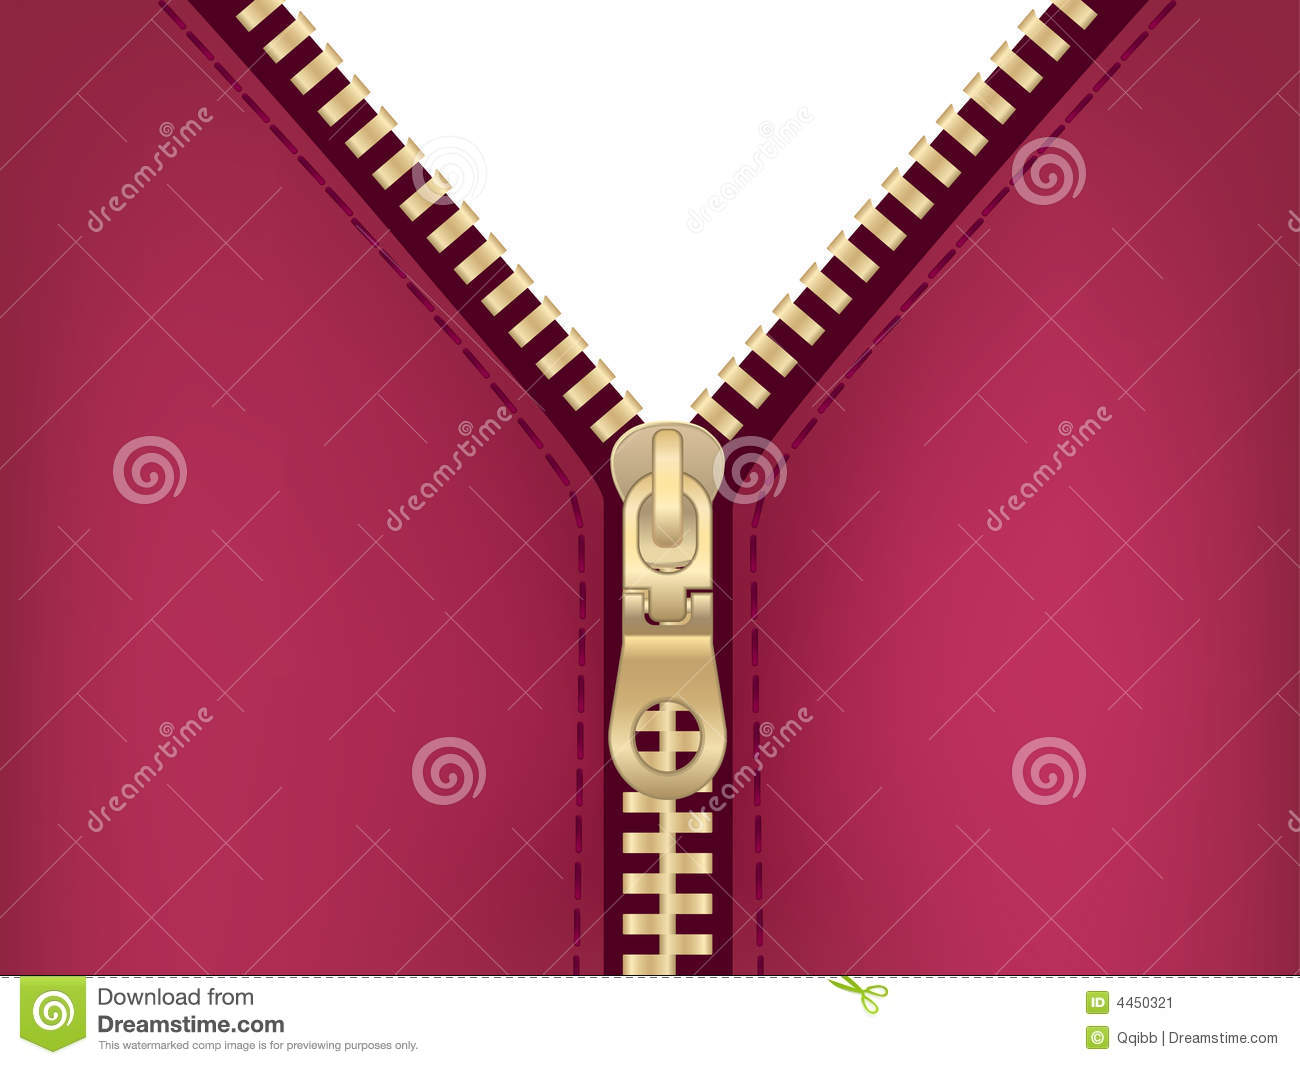 Clip Art Of Zipper On Jacket Stock Image   Image  4450321